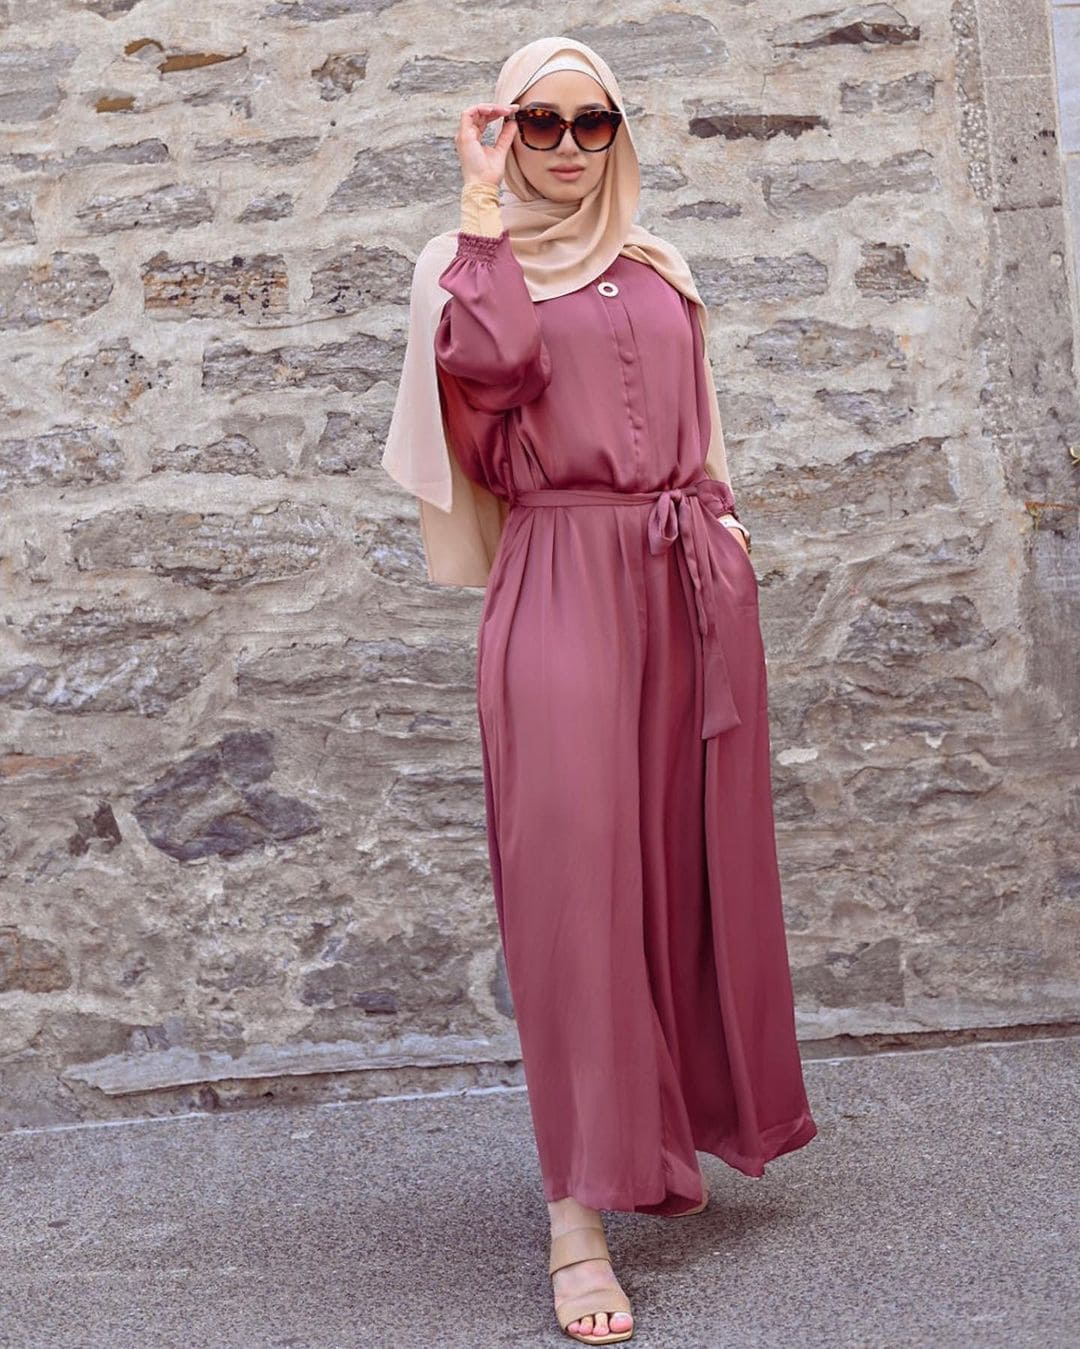 Blogger Of The Week: Zaynab aka @zaynabrayhan - Hijab Fashion Inspiration